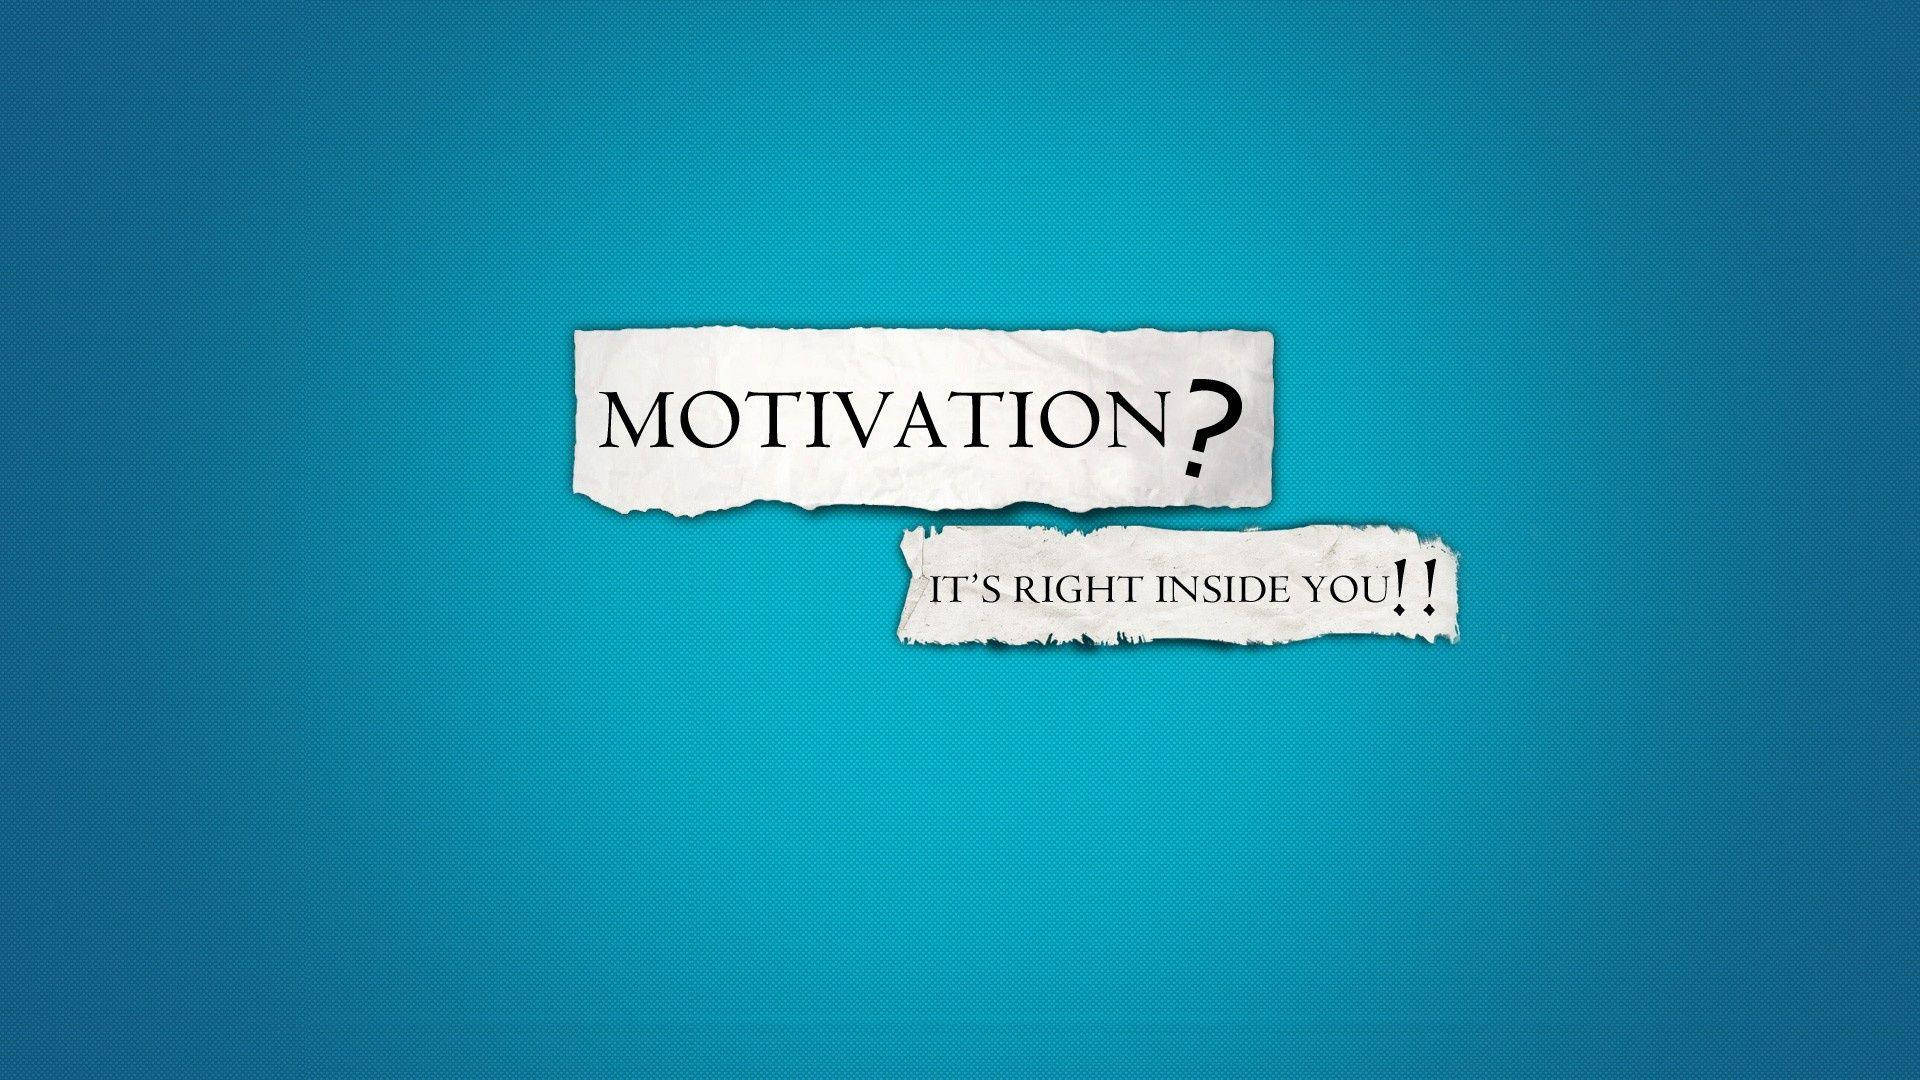 Motivational Wallpaper Images - Free Download on Freepik